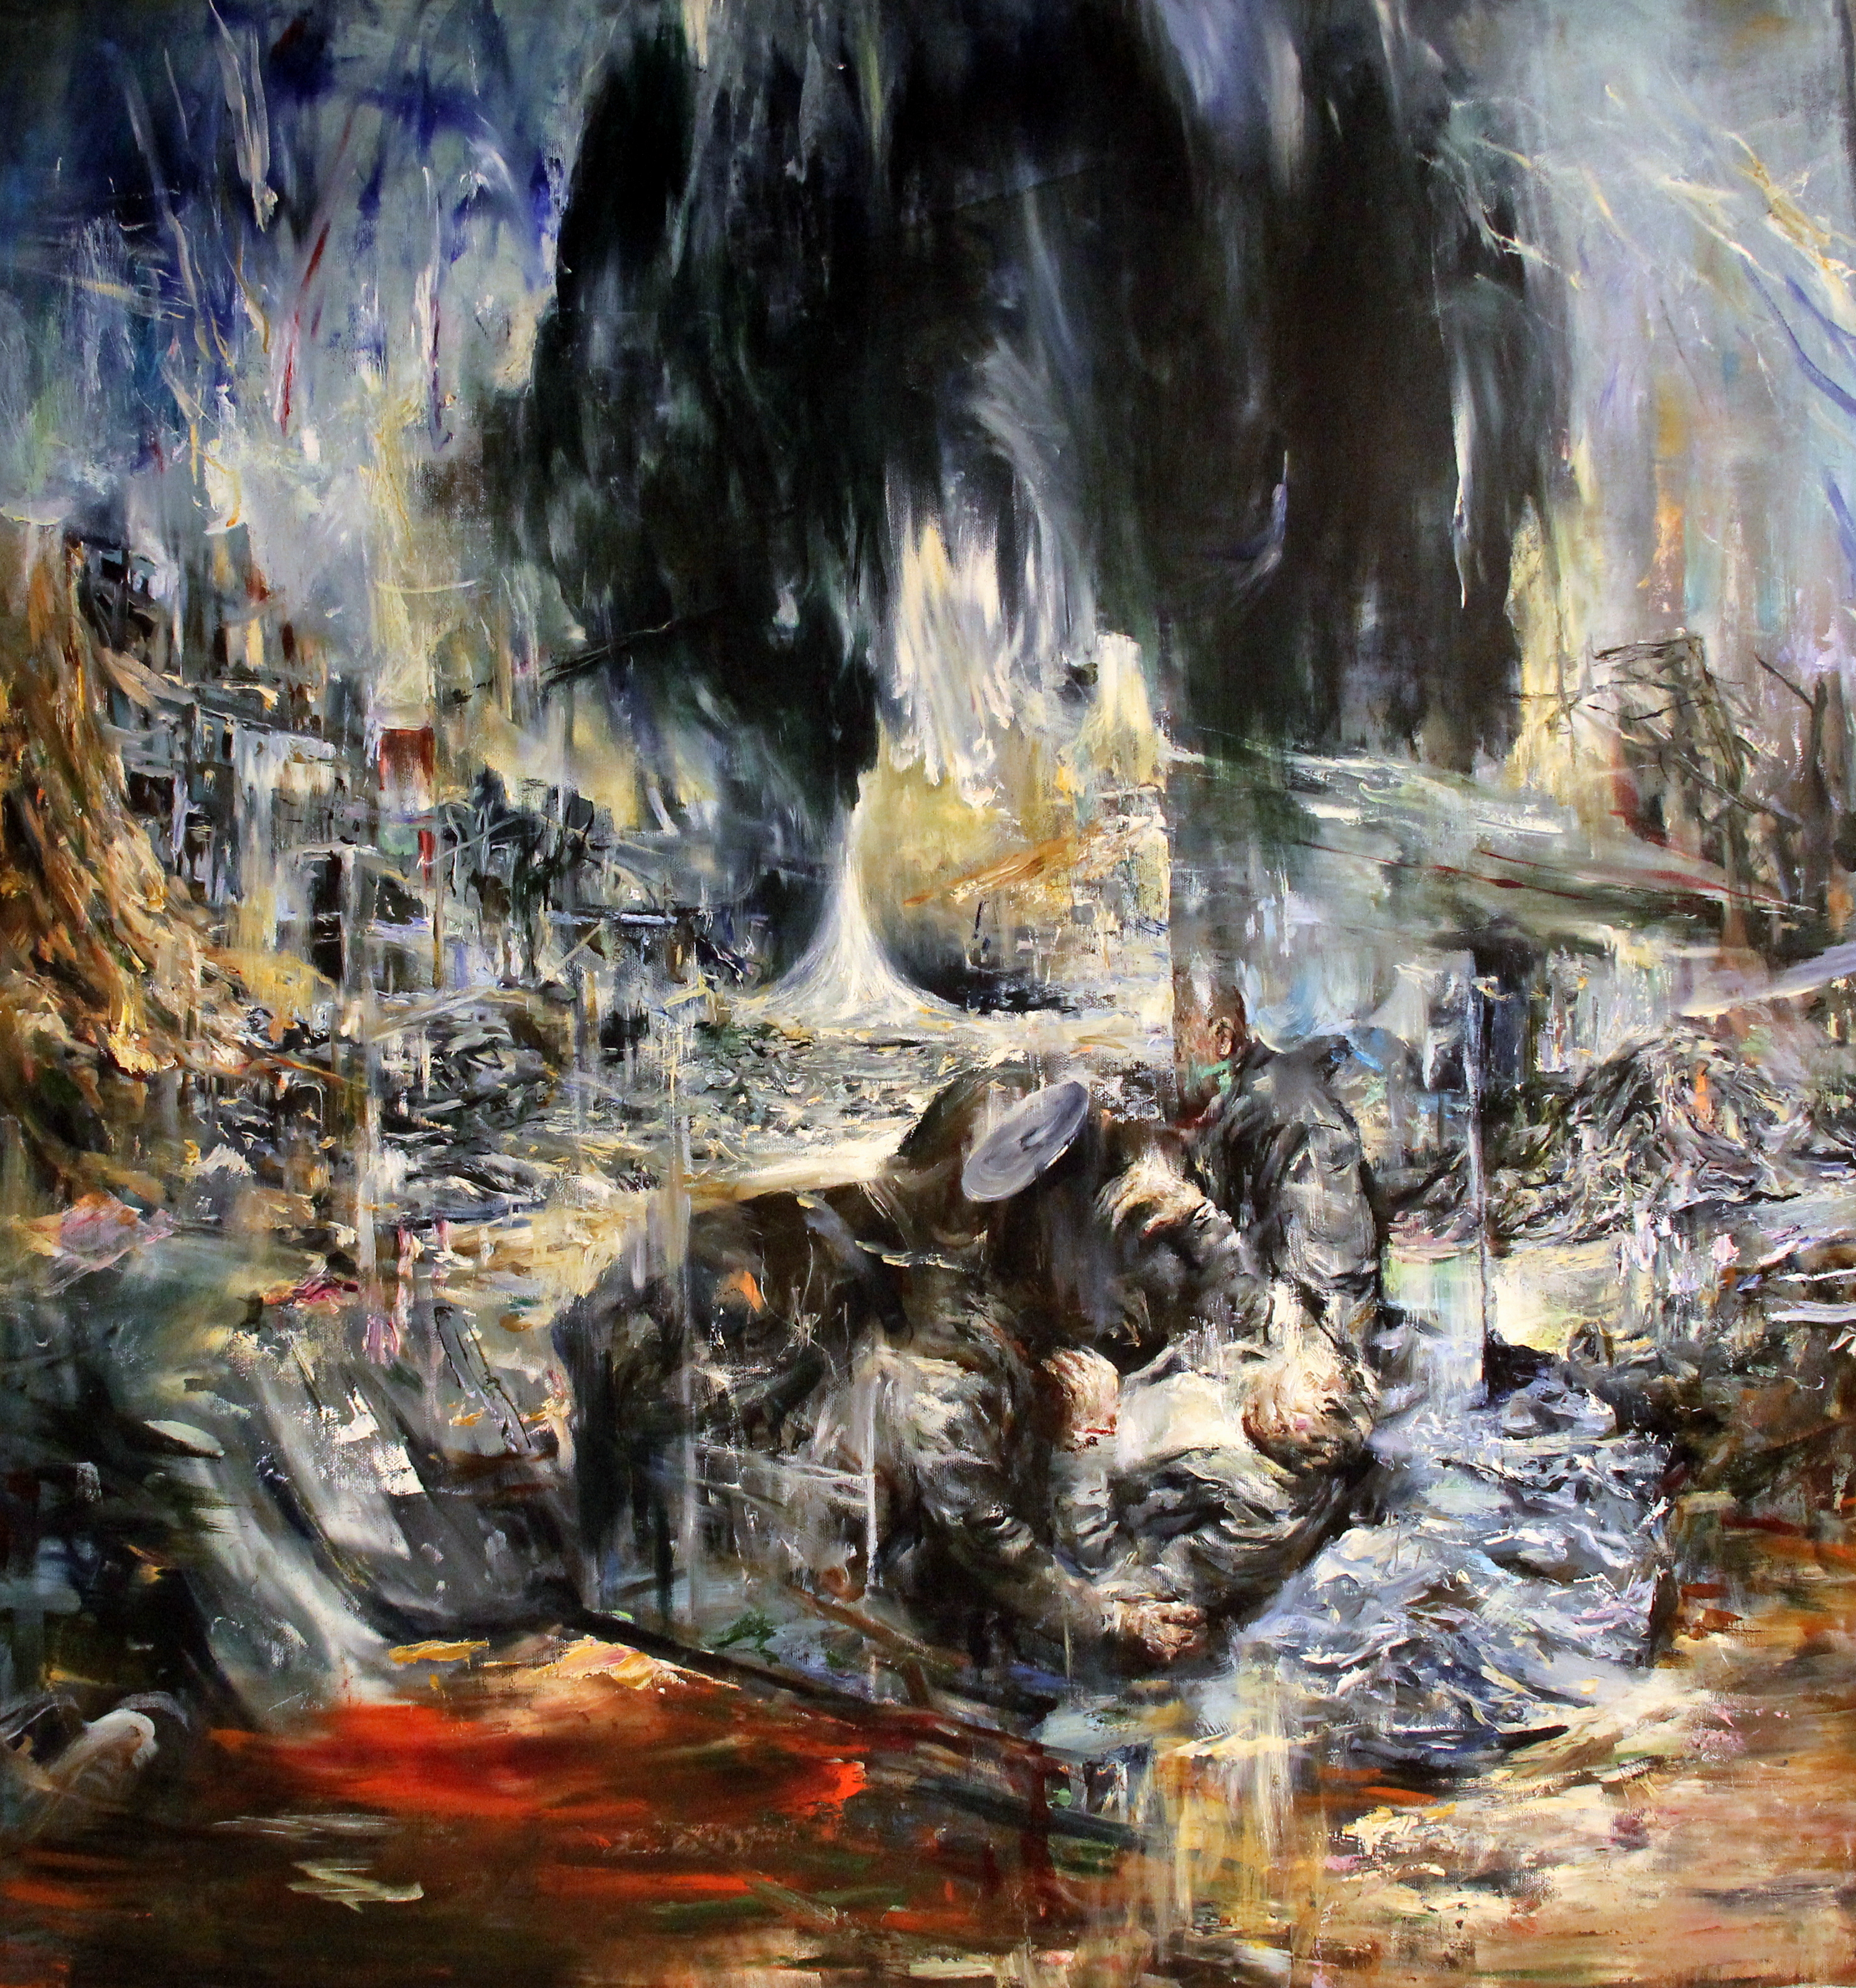 Waiting for Something, 2014, Tuval üzerine yağlıboya- Oil on canvas, 94x90 cm